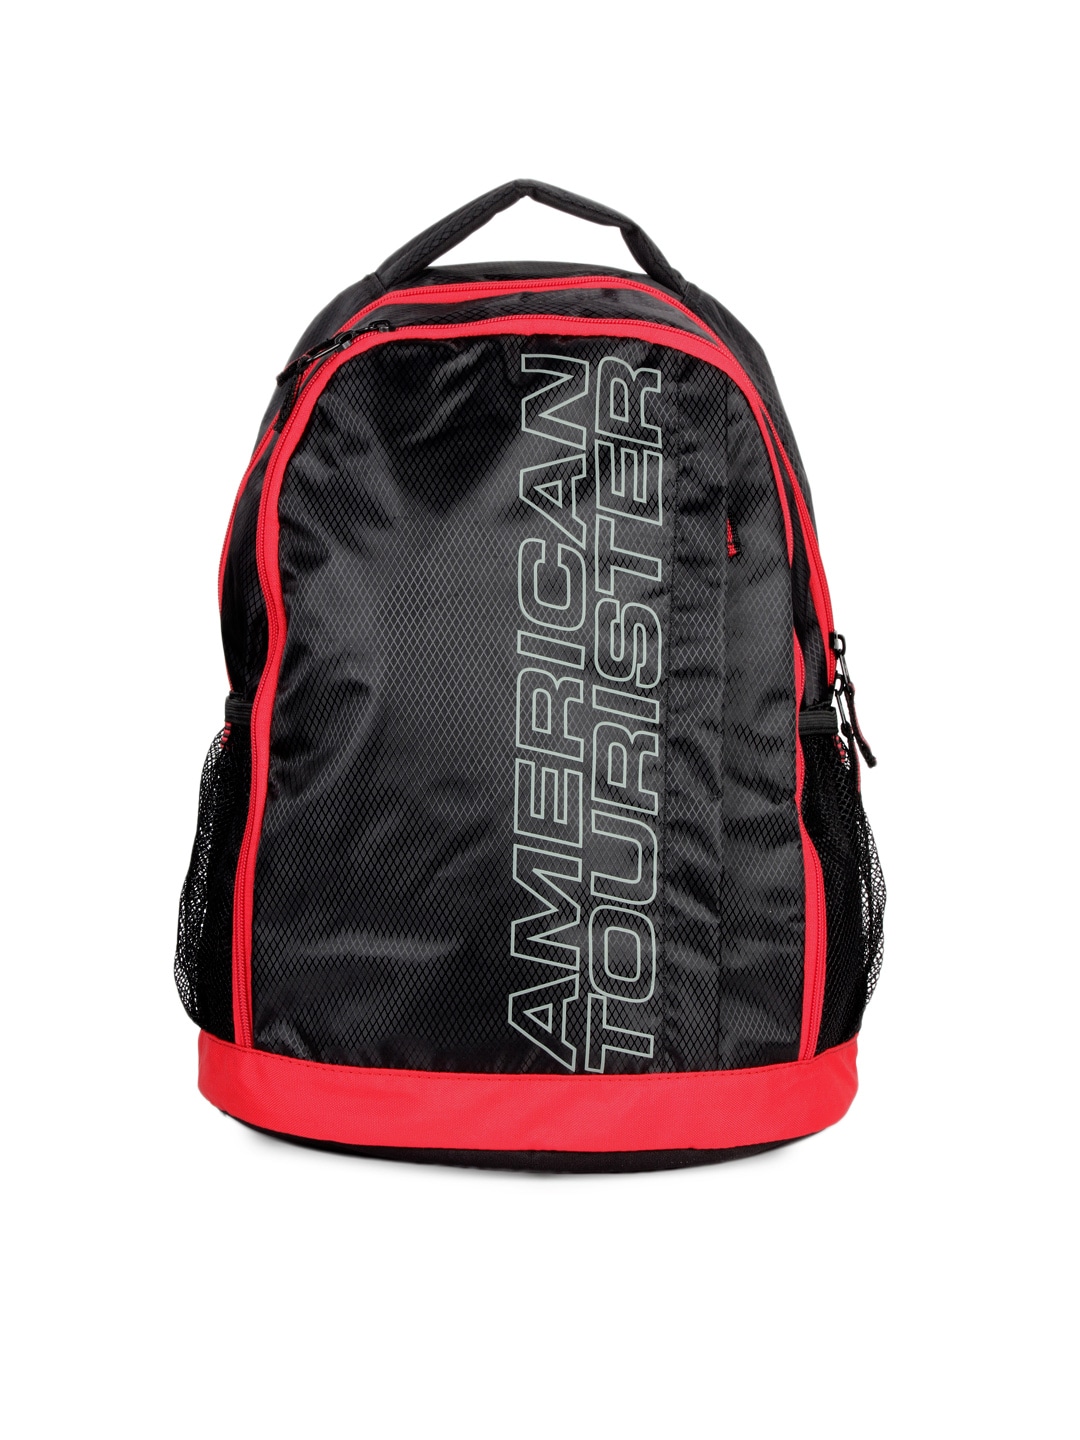 American Tourister Unisex Black Backpack